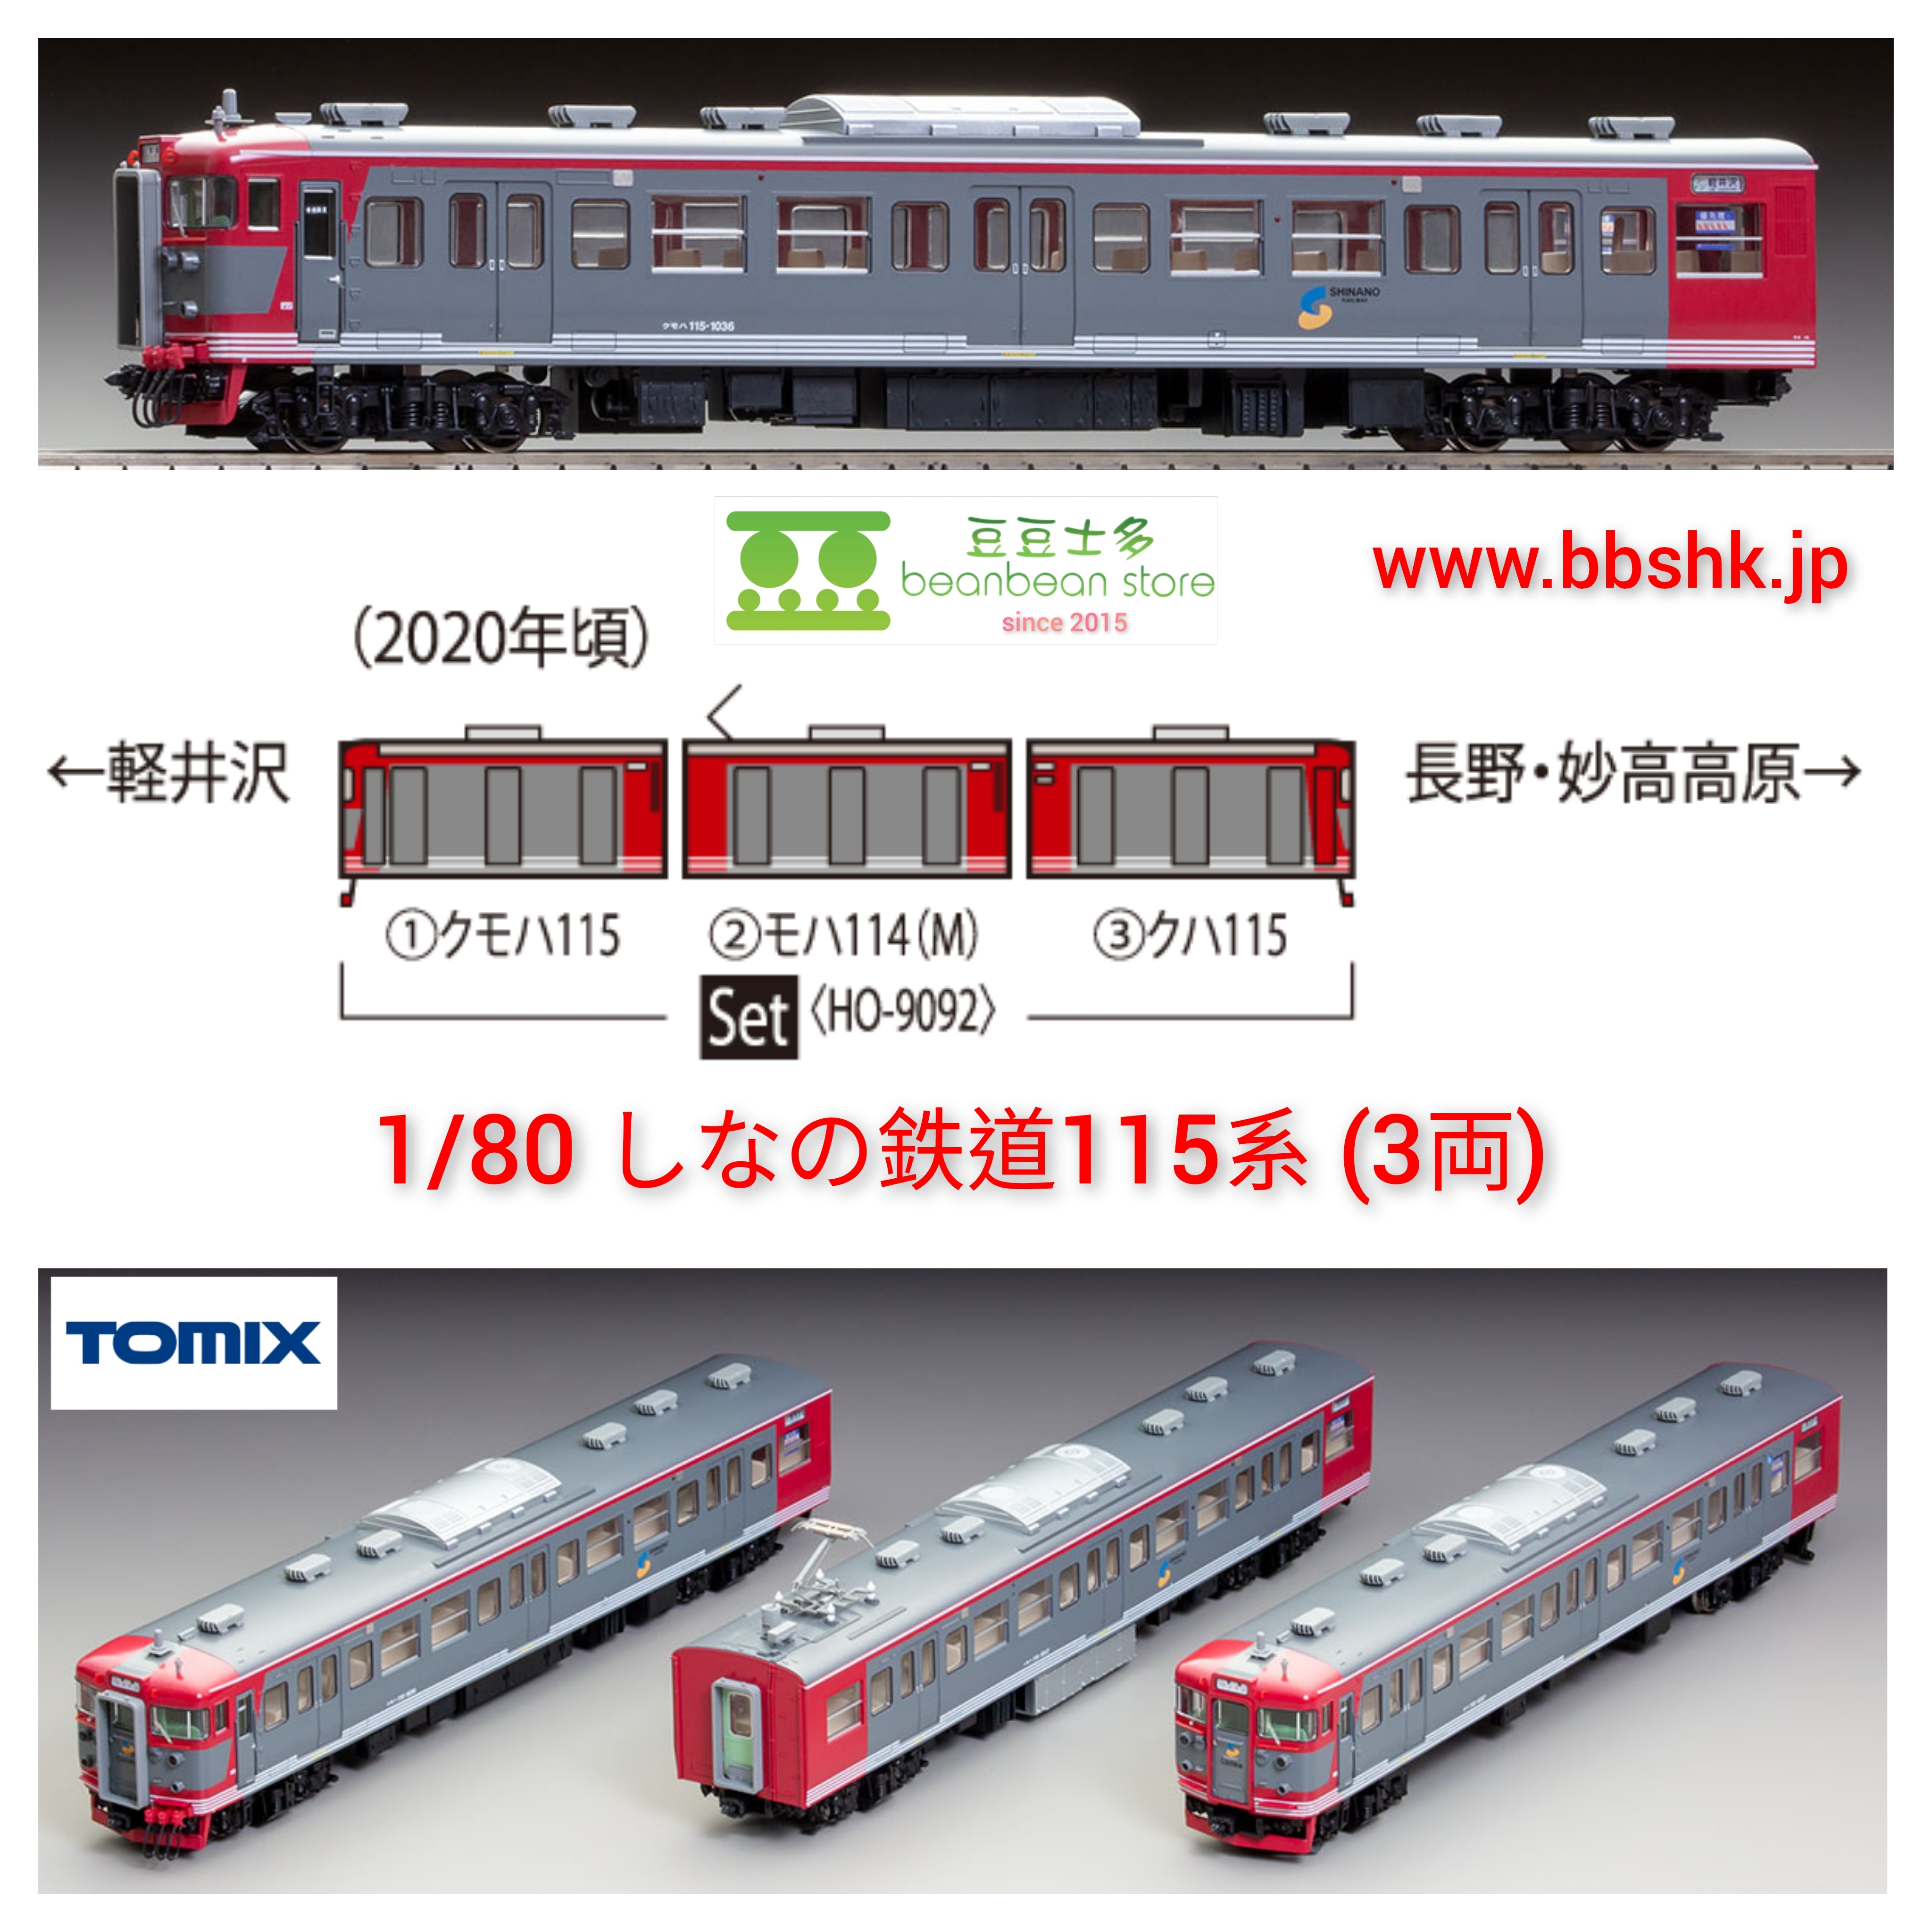 TOMIX HO-9092 16番(HO) 信濃鐵道115系電車(3両)